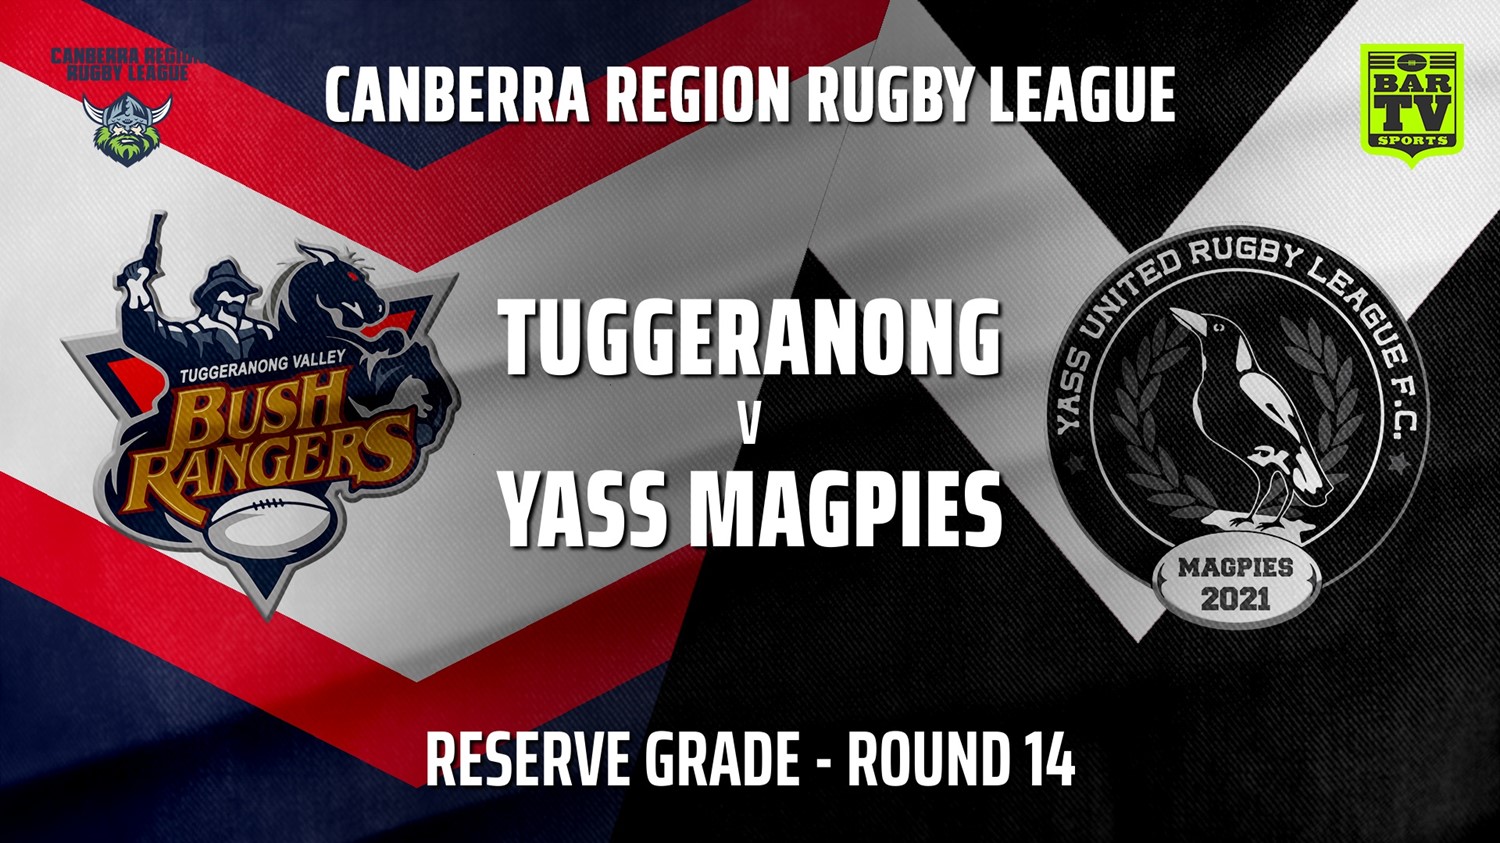 210731-Canberra Round 14 - Reserve Grade - Tuggeranong Bushrangers v Yass Magpies Slate Image